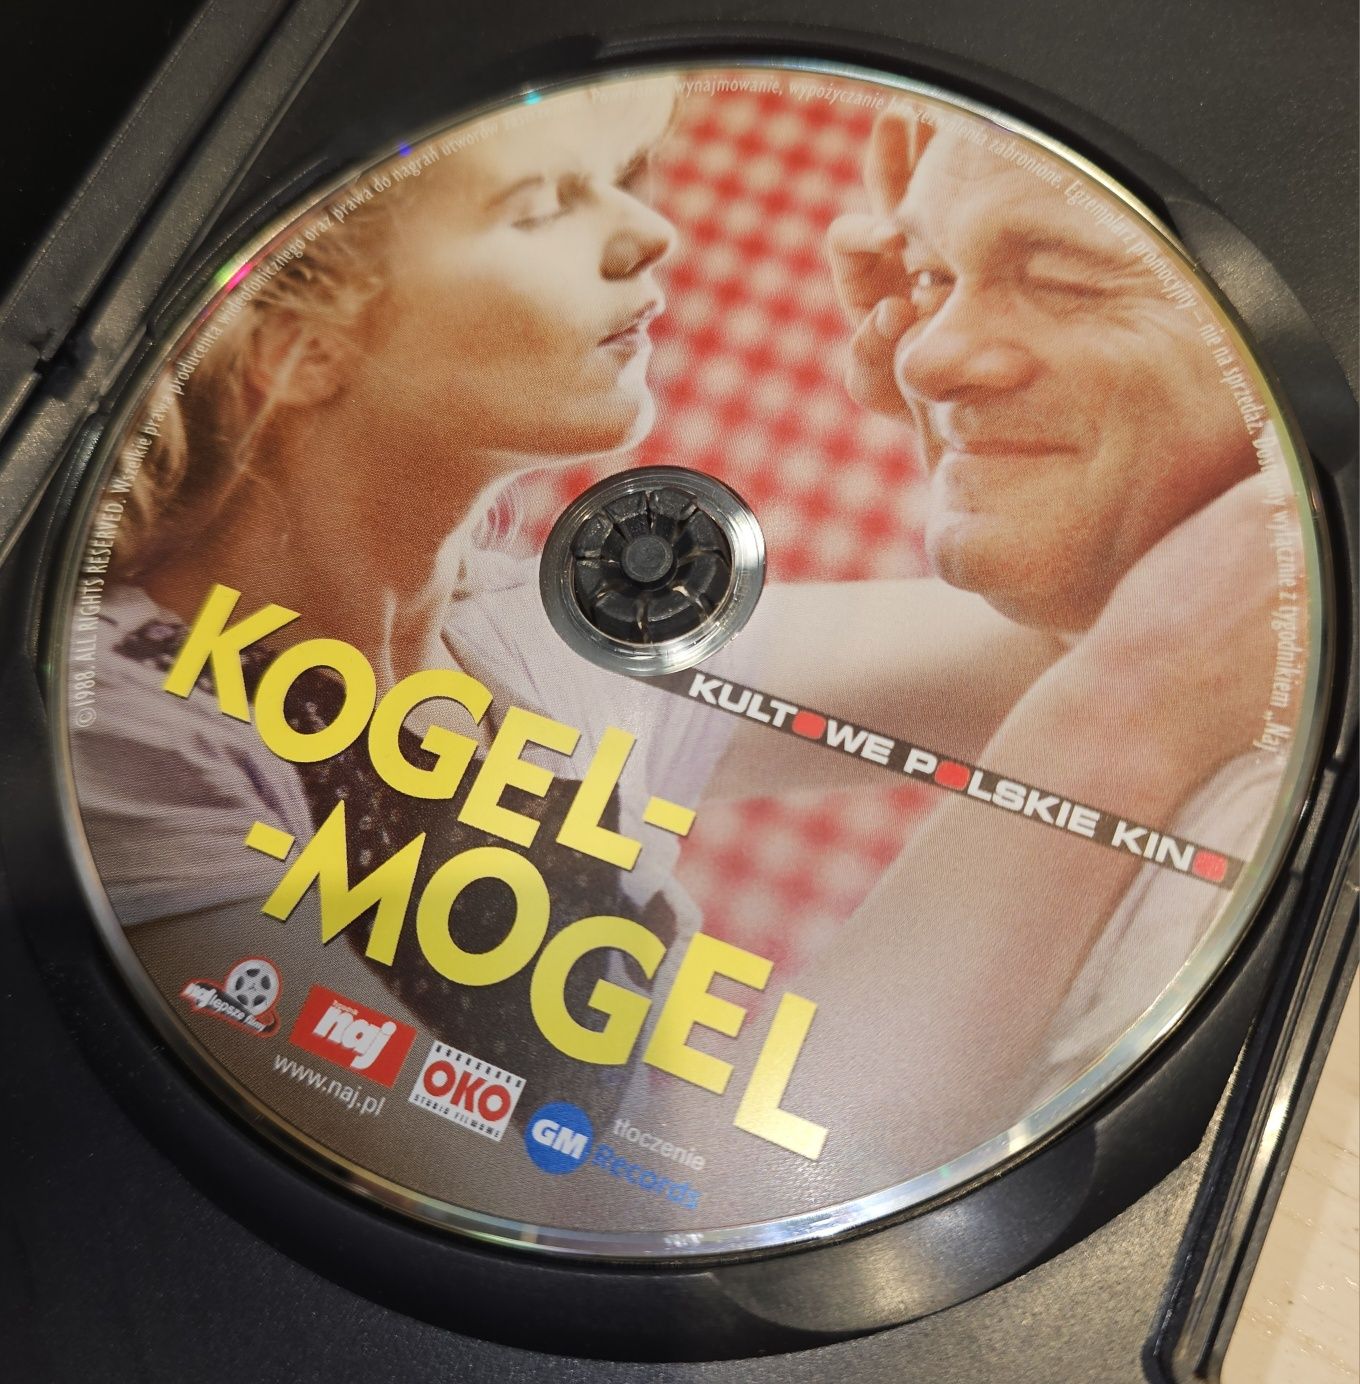 Kogel Mogel film dvd klasyka komedii